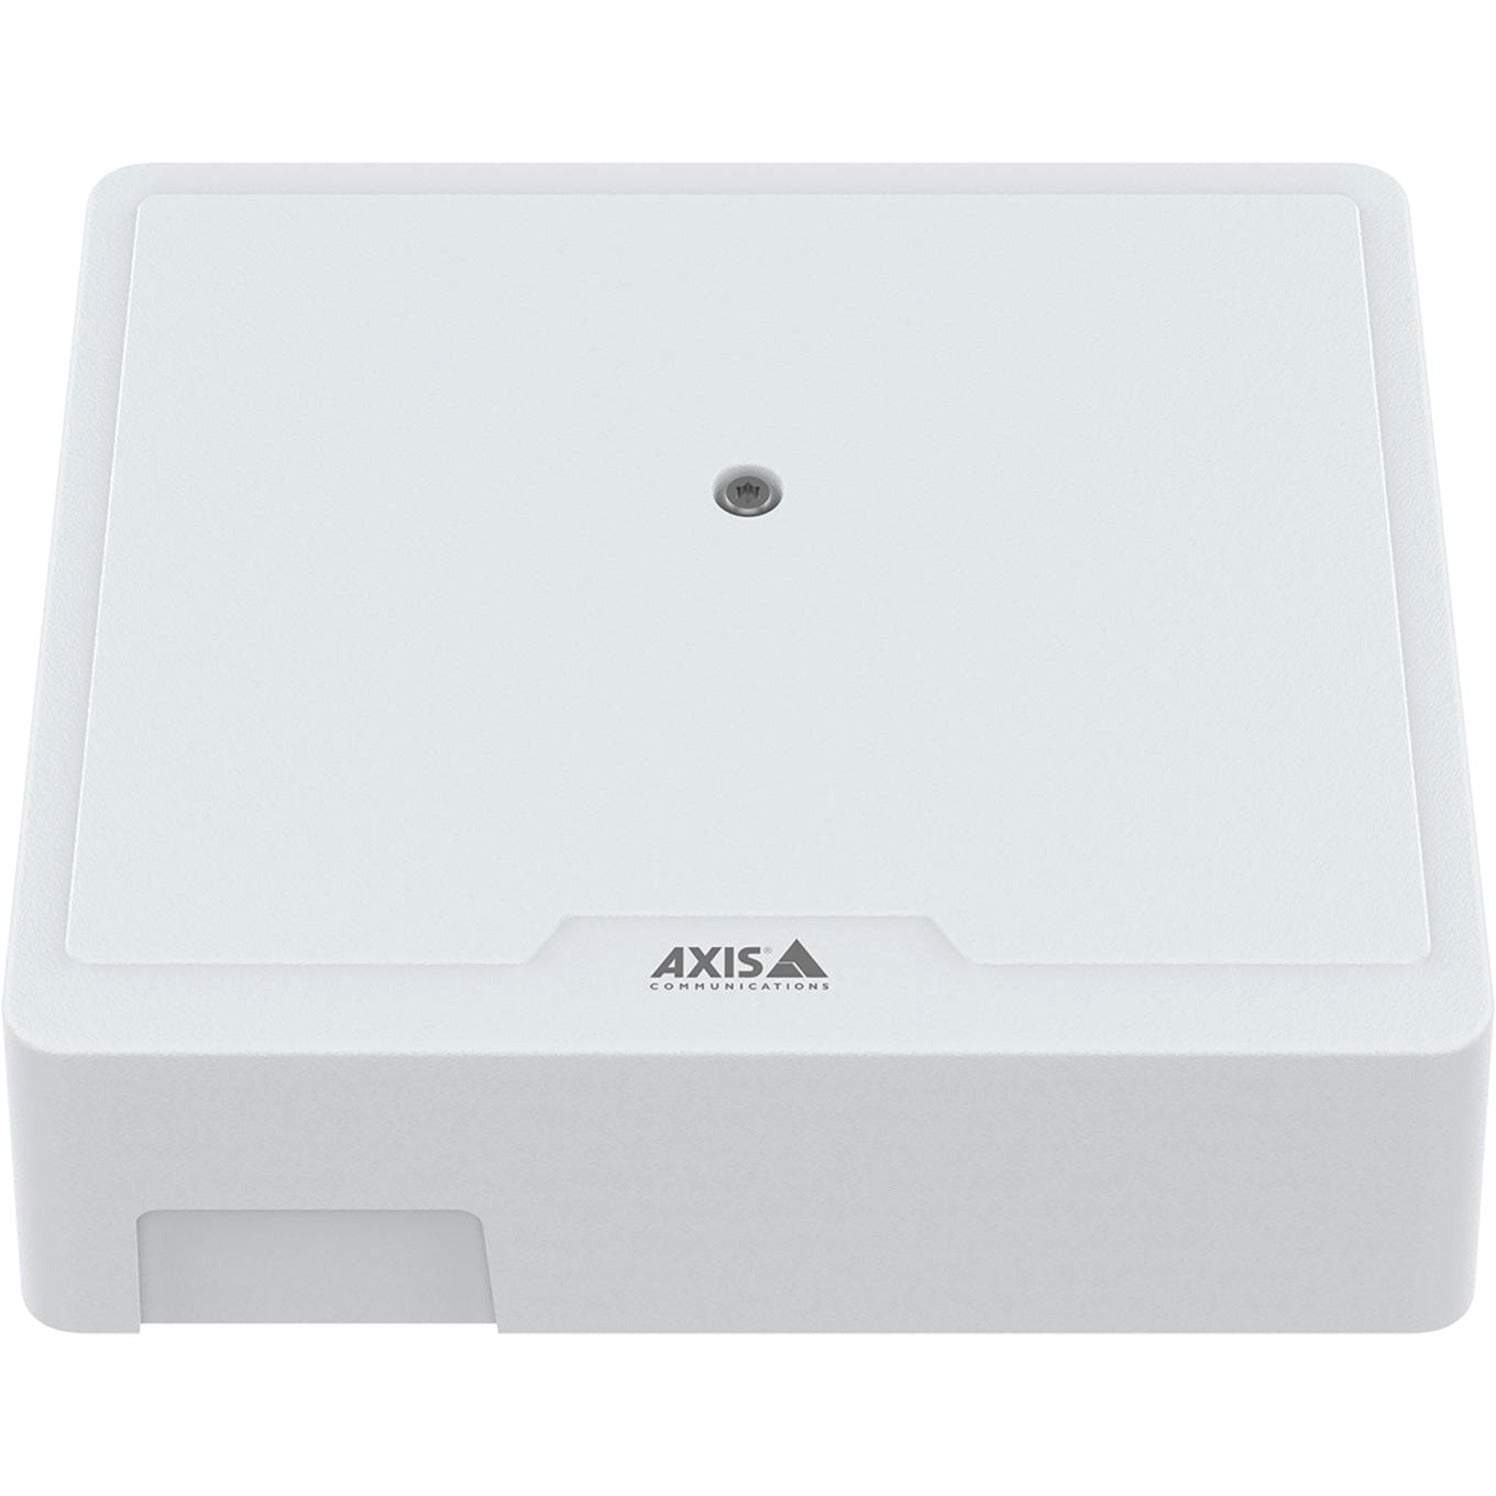 AXIS 02368-001 A1210 Network Door Controller, Wall Mountable, DIN Rail Mountable, White, 5 Year Warranty